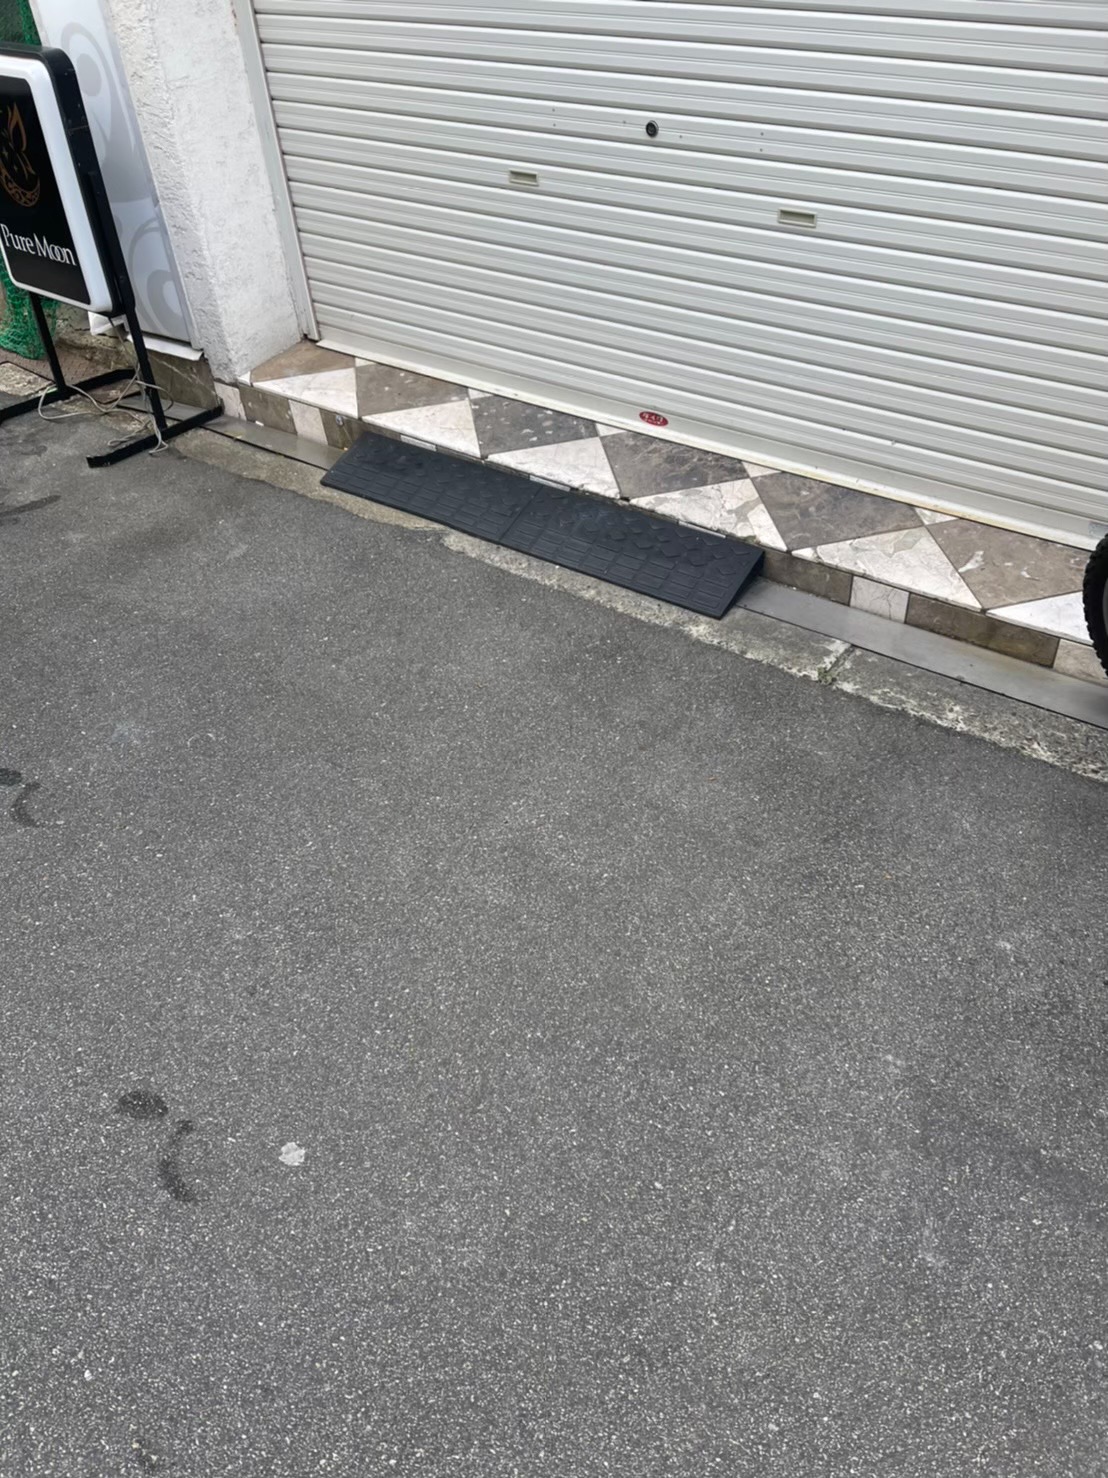 兵庫県神戸市垂水区で不用品回収の口コミ、評判